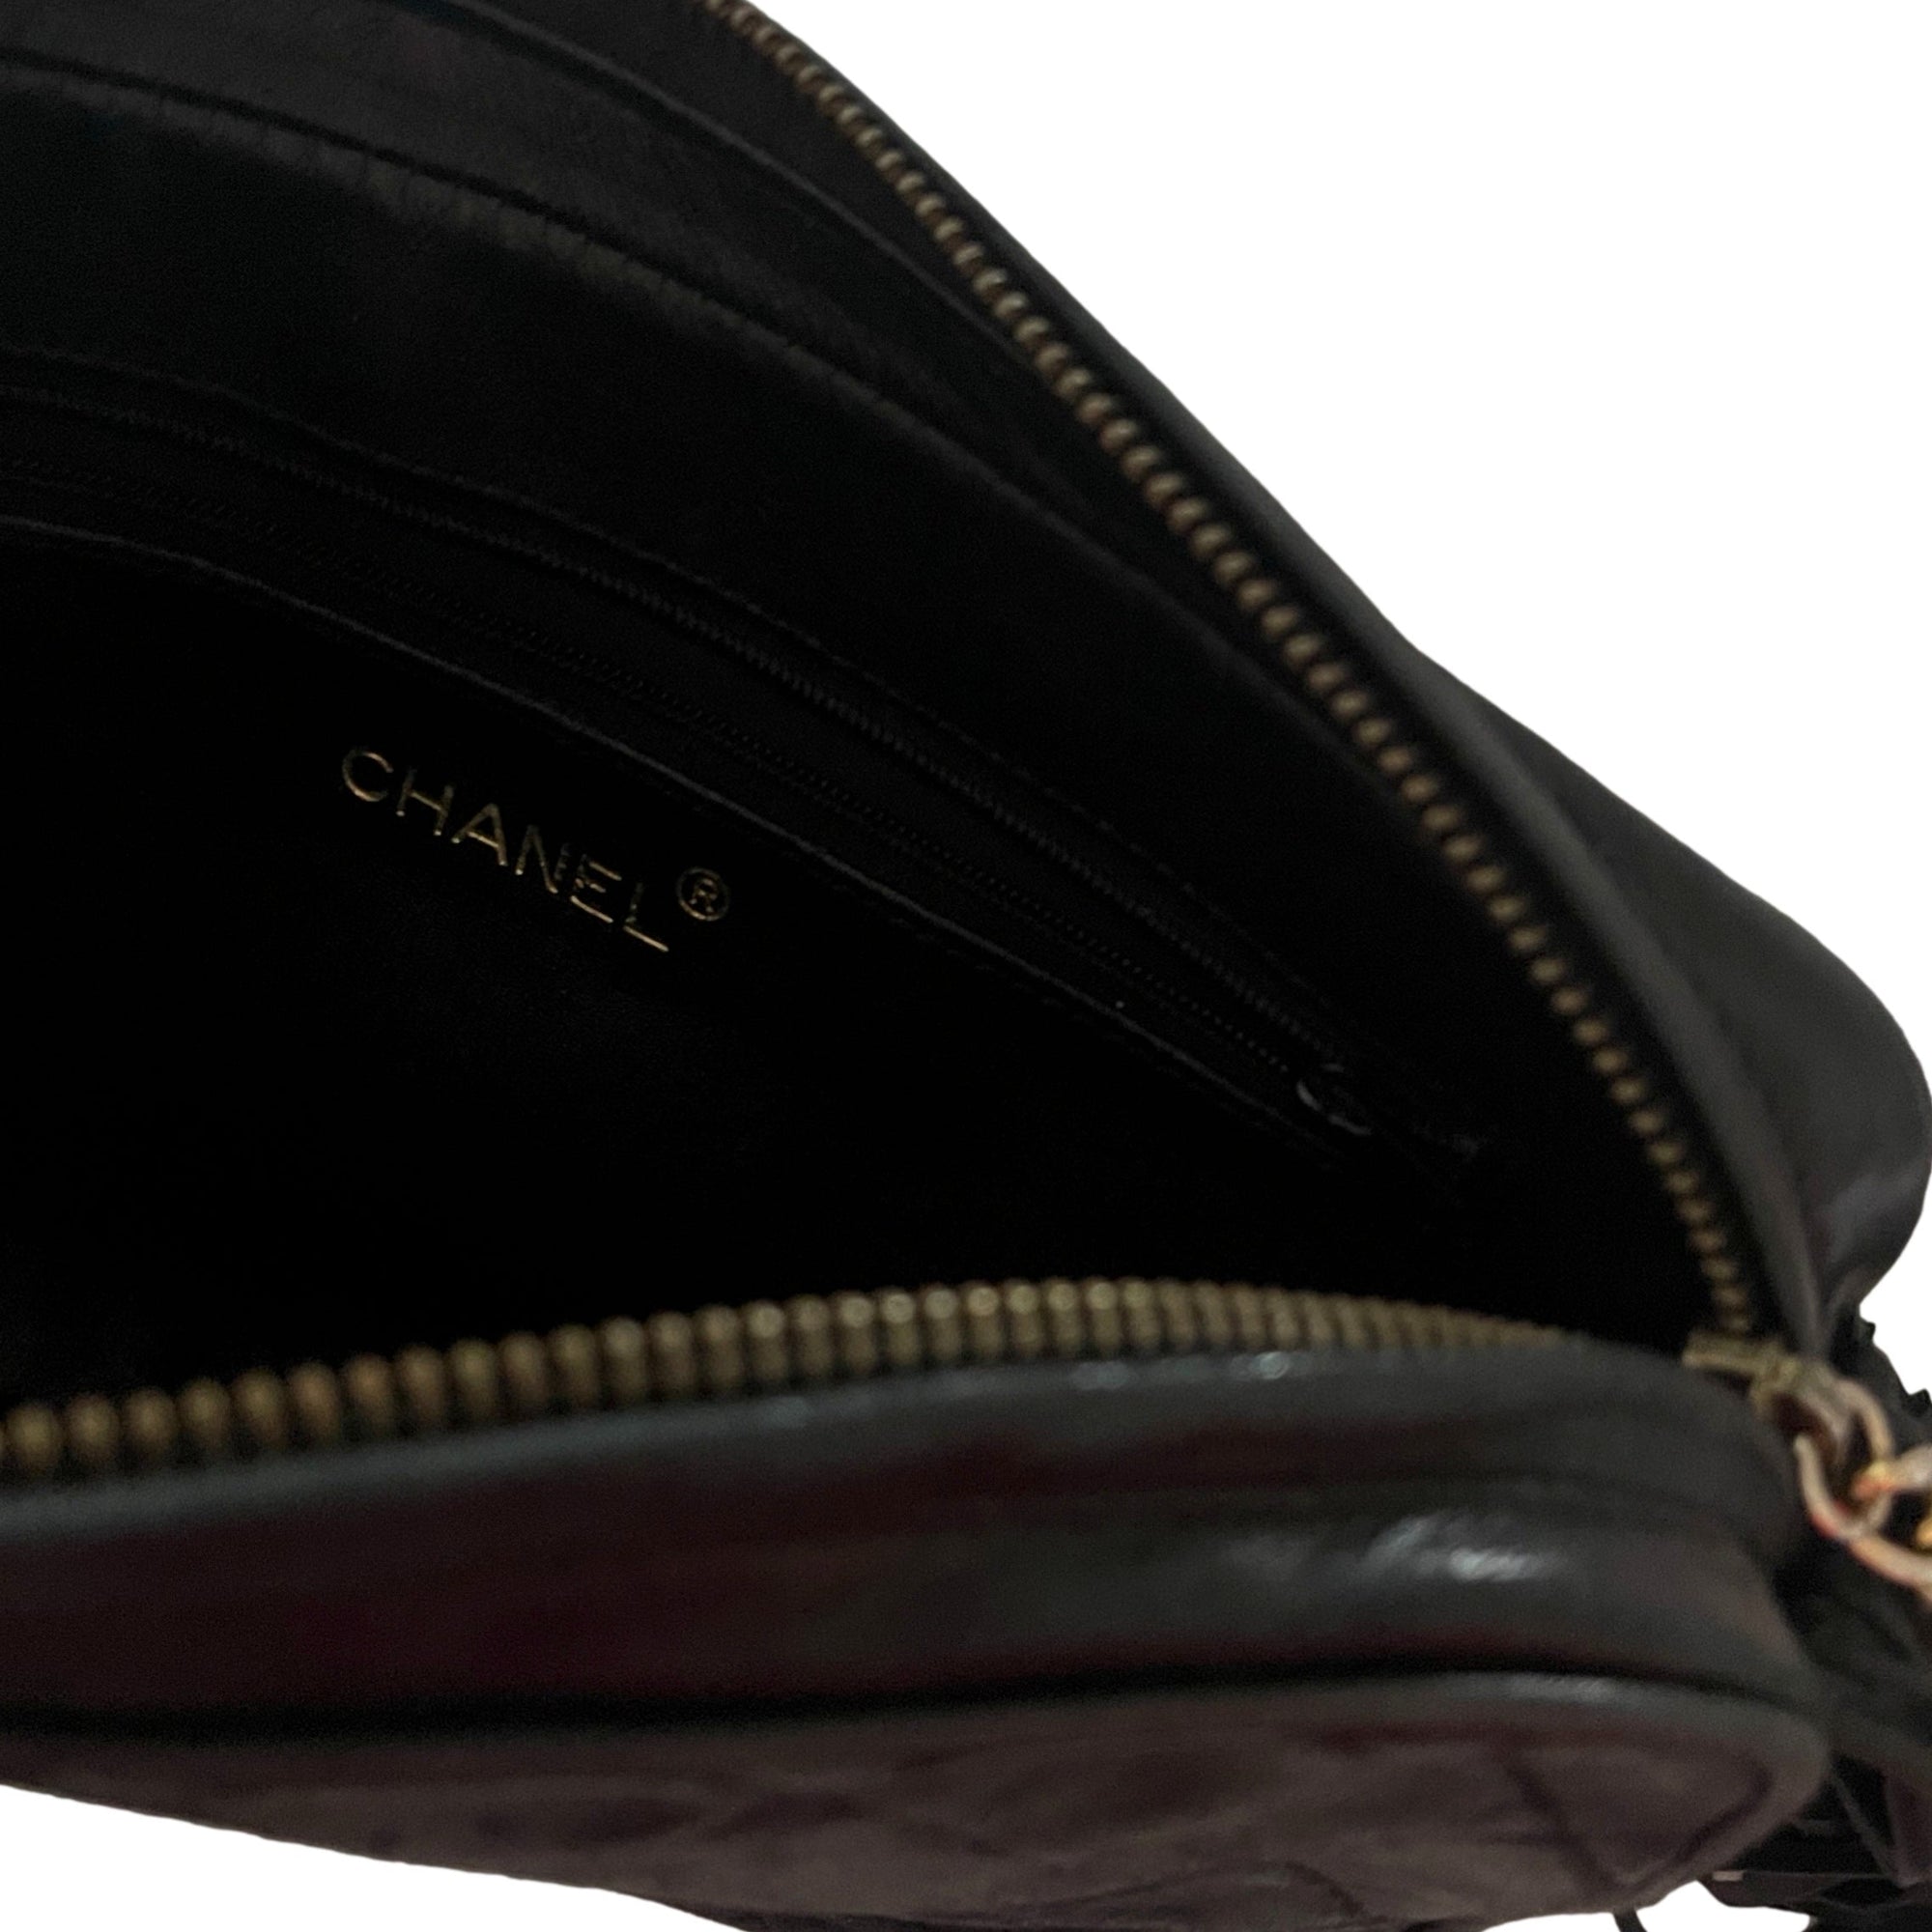 Chanel Black Lambskin Leather Tassel Bag - Handbags